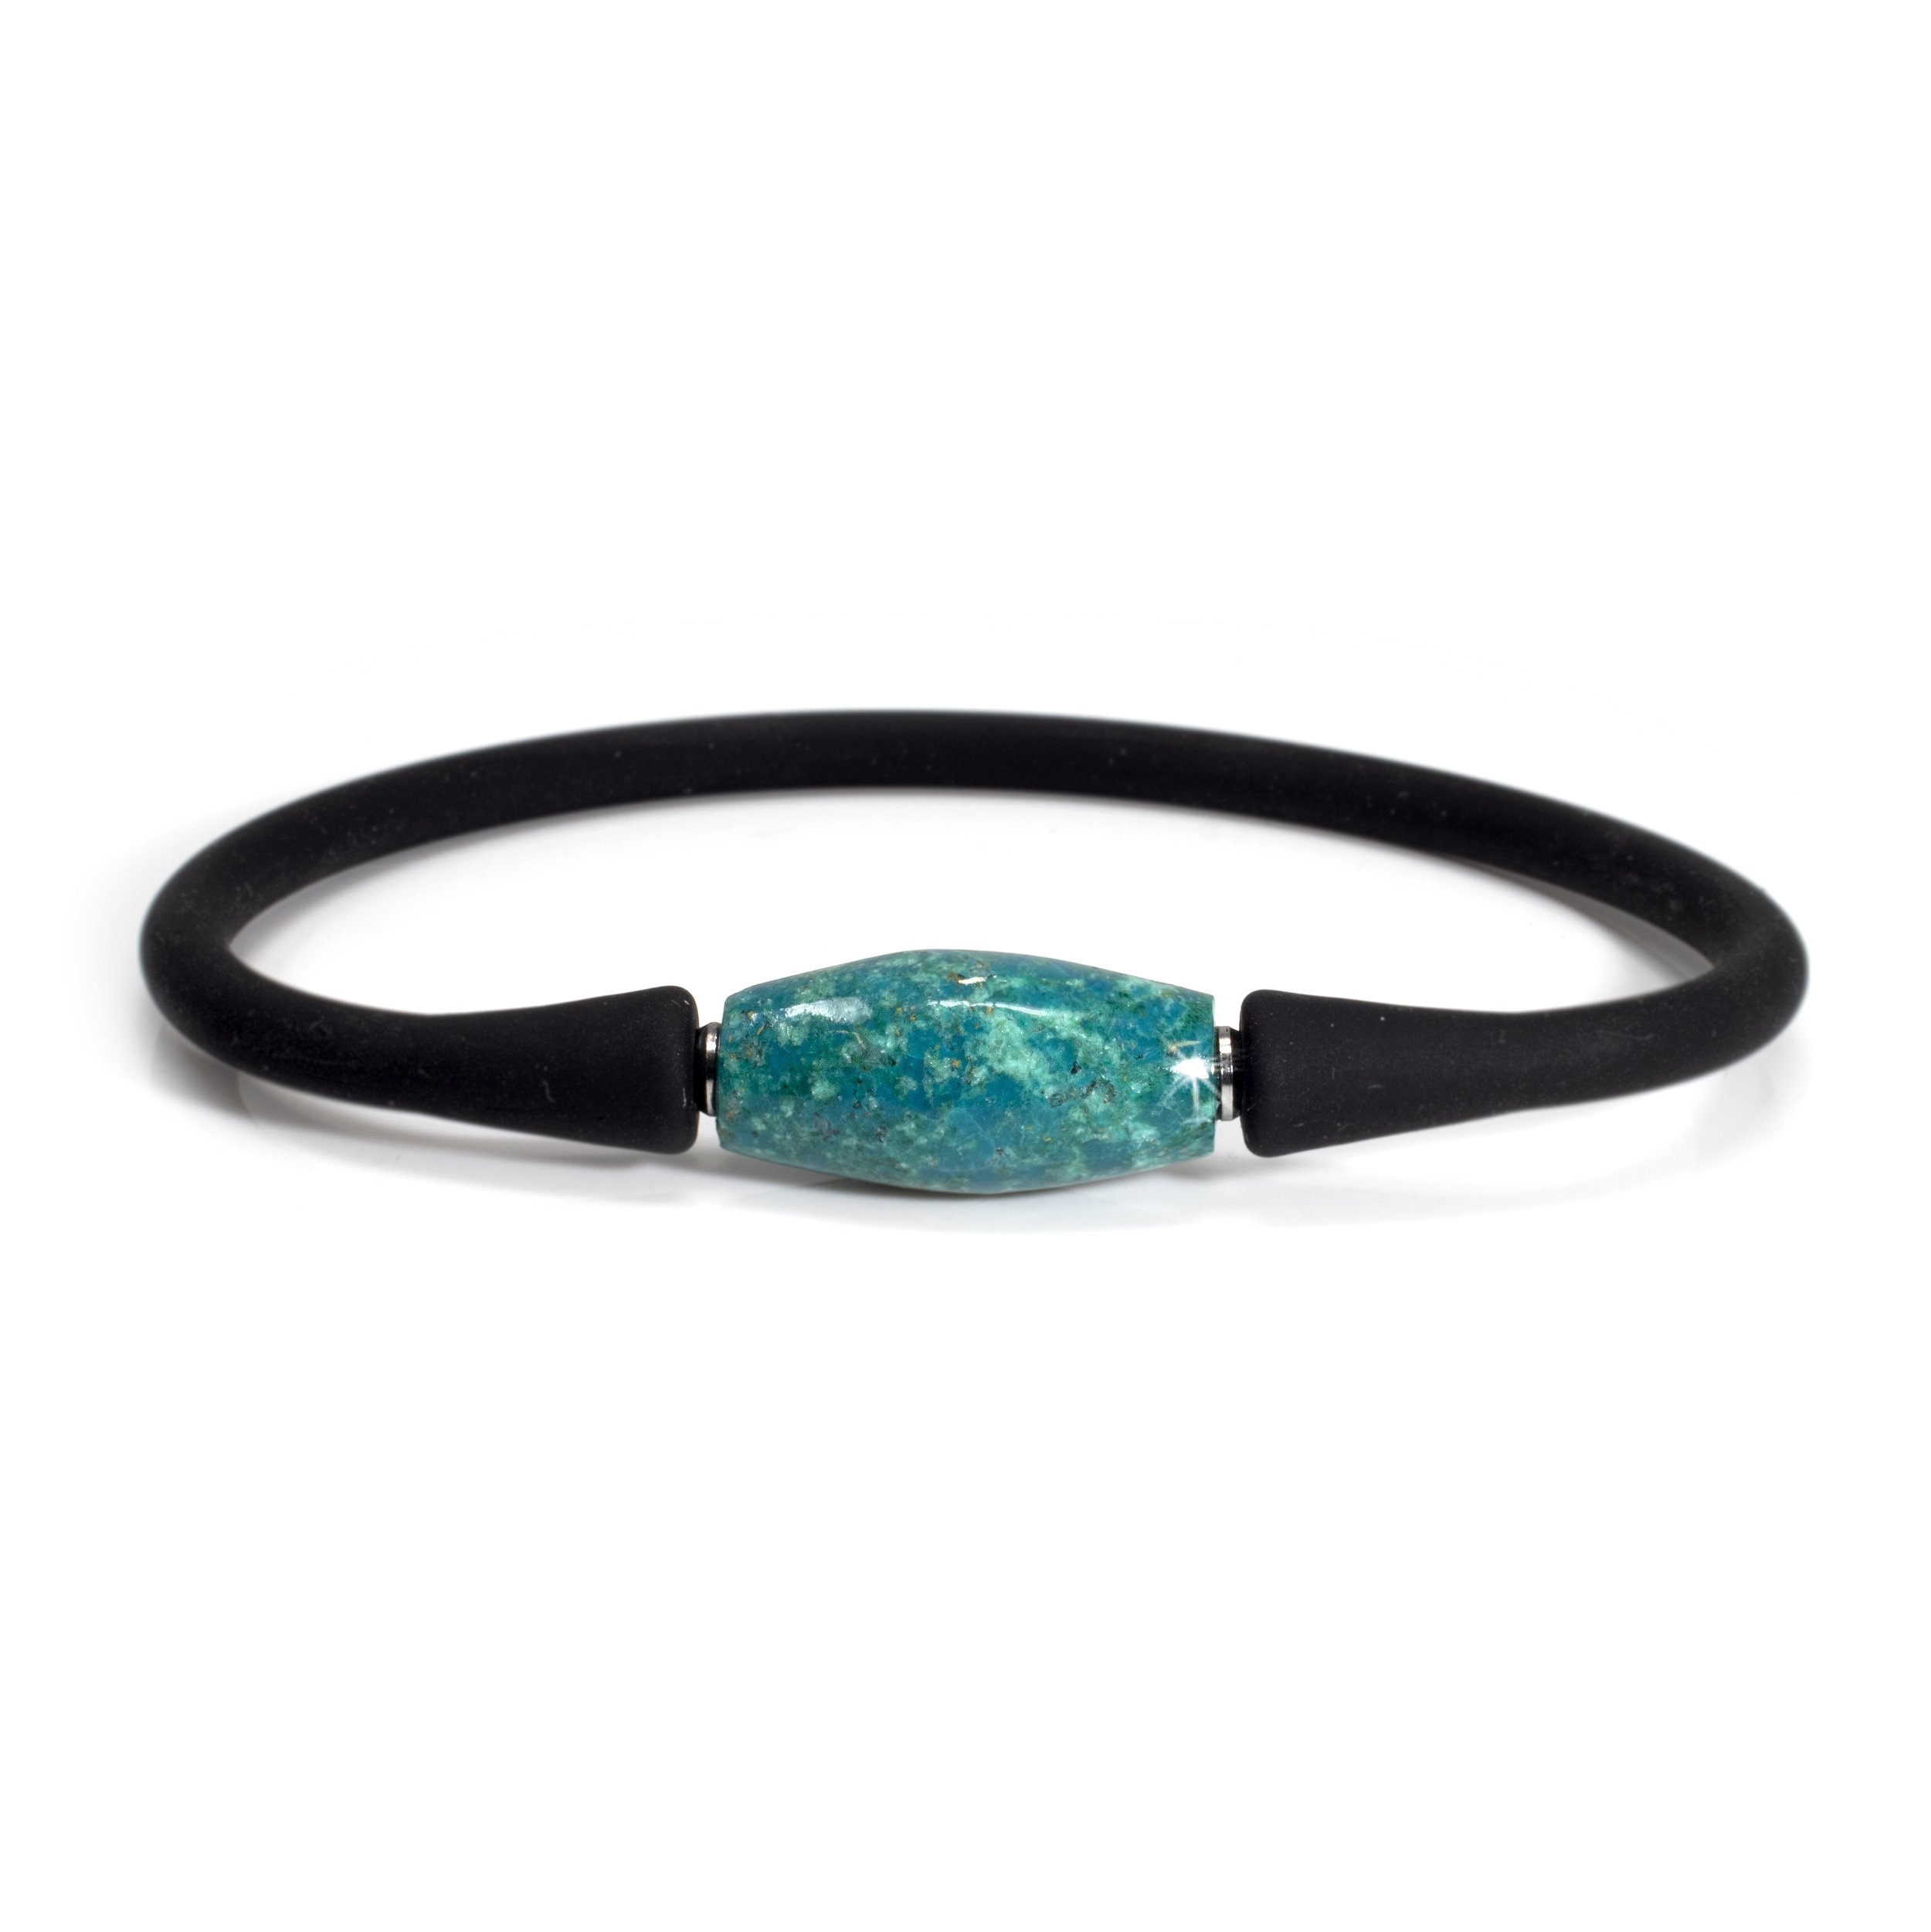 Chrysocolla Bangle Bracelet - Barrel Bead Set On Black Silicone Band - Vibrant Ocean Blue & Jungle Green Hues With Raw Sienna Matrix